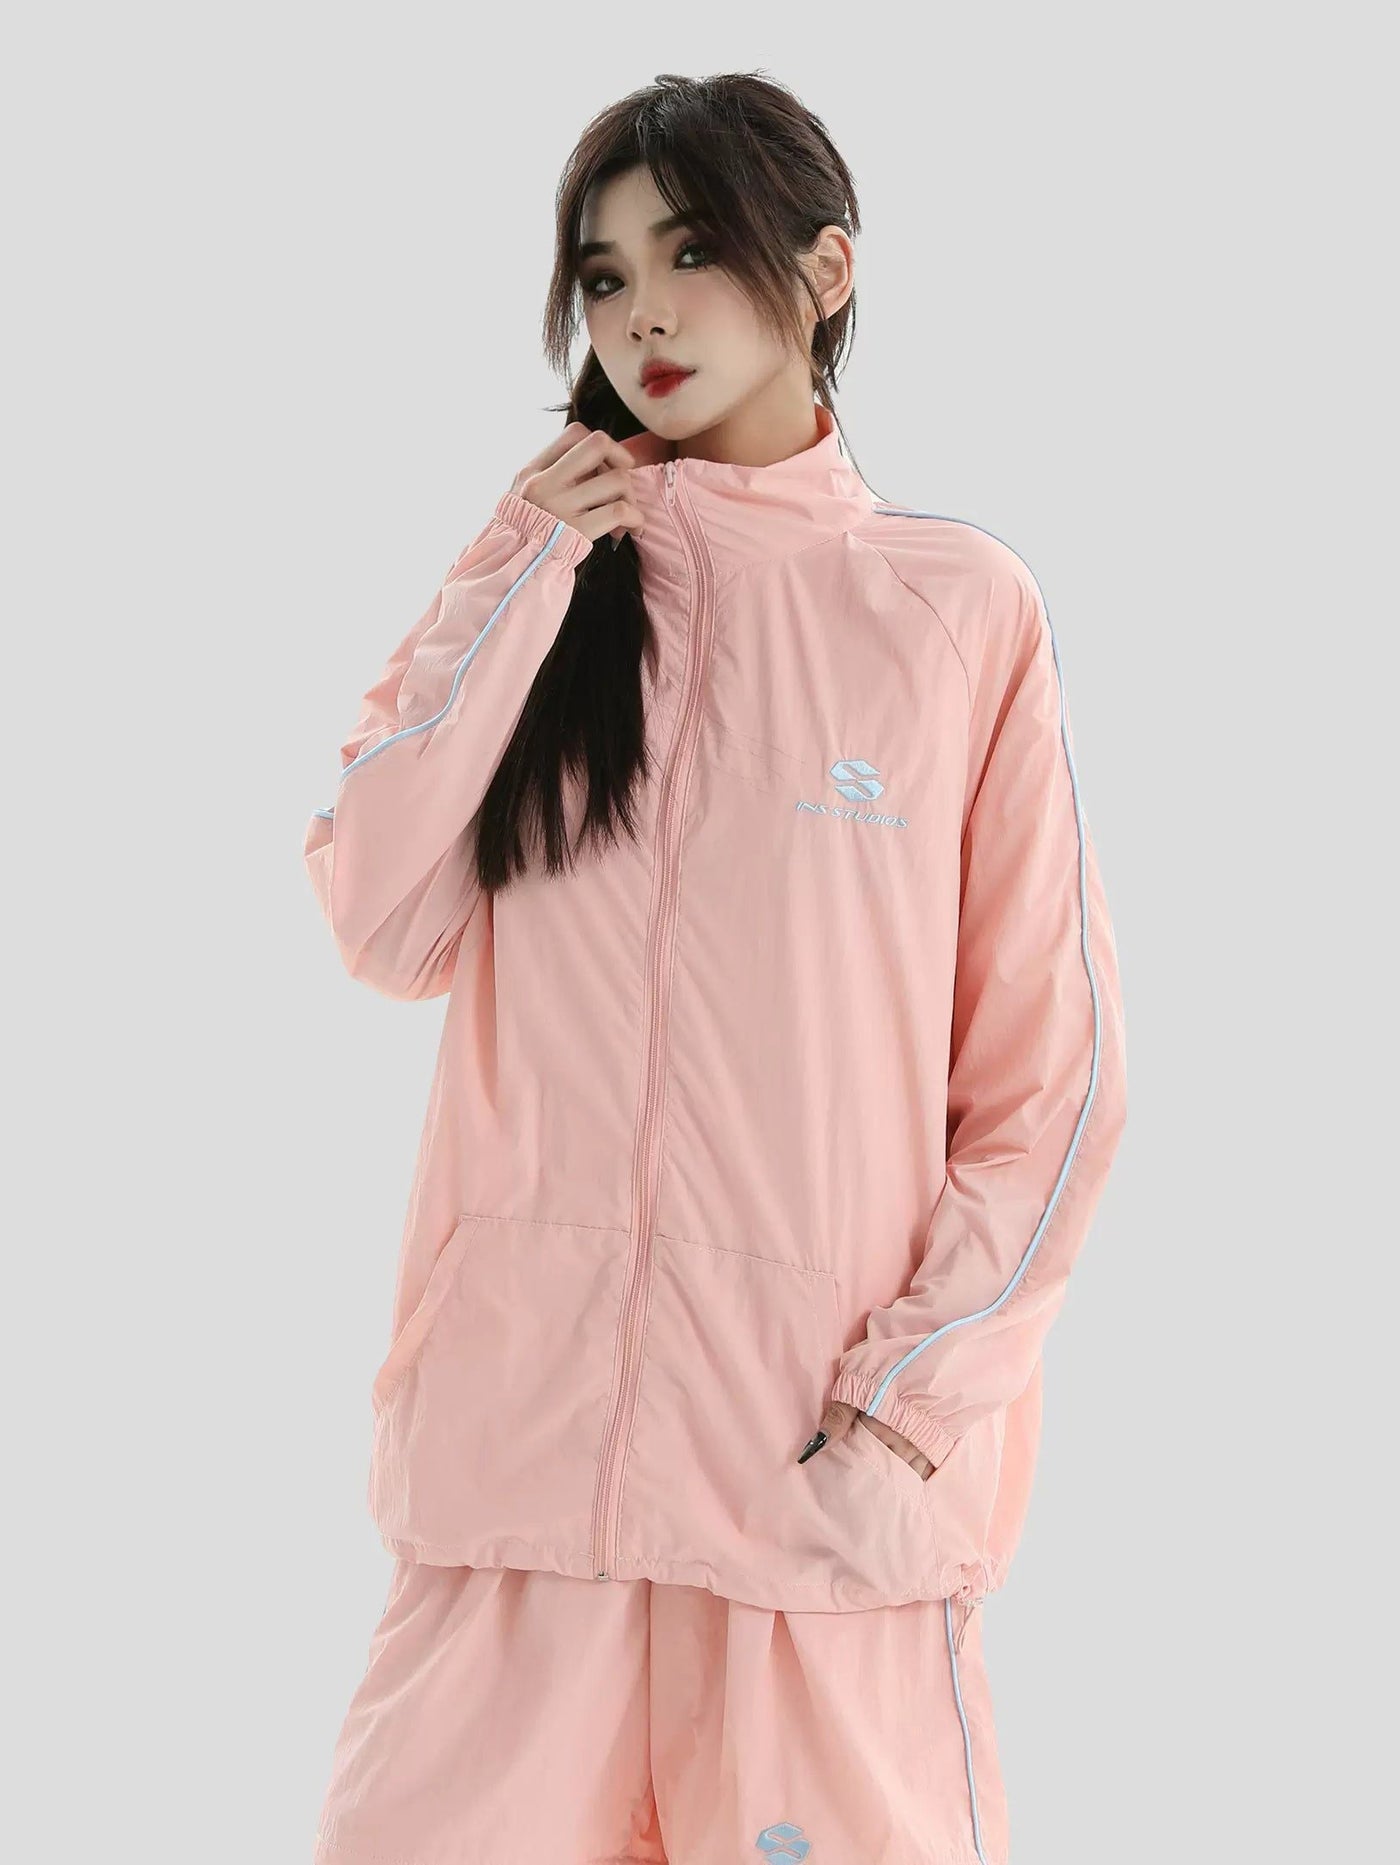 Sun Protection Thin Jacket & Nylon Shorts Set Korean Street Fashion Clothing Set By INS Korea Shop Online at OH Vault